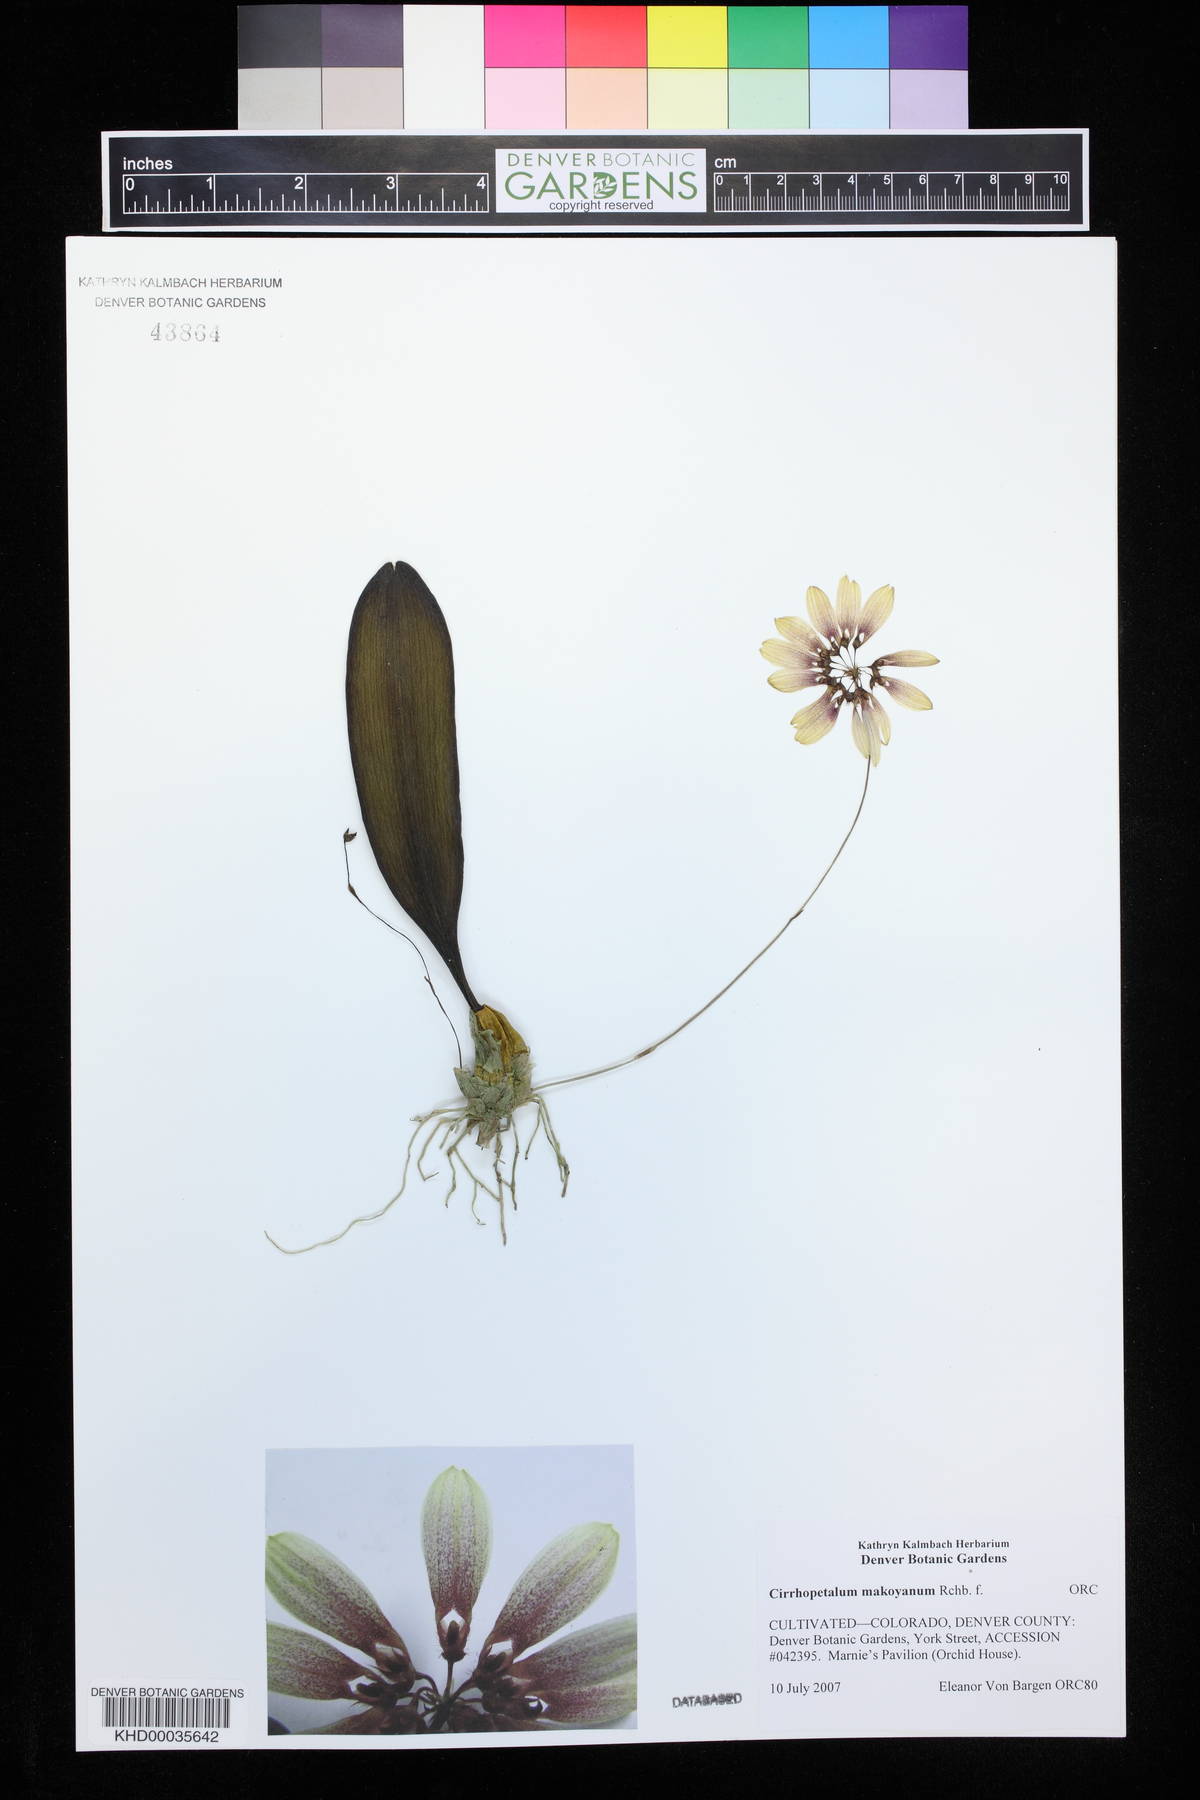 Bulbophyllum makoyanum image